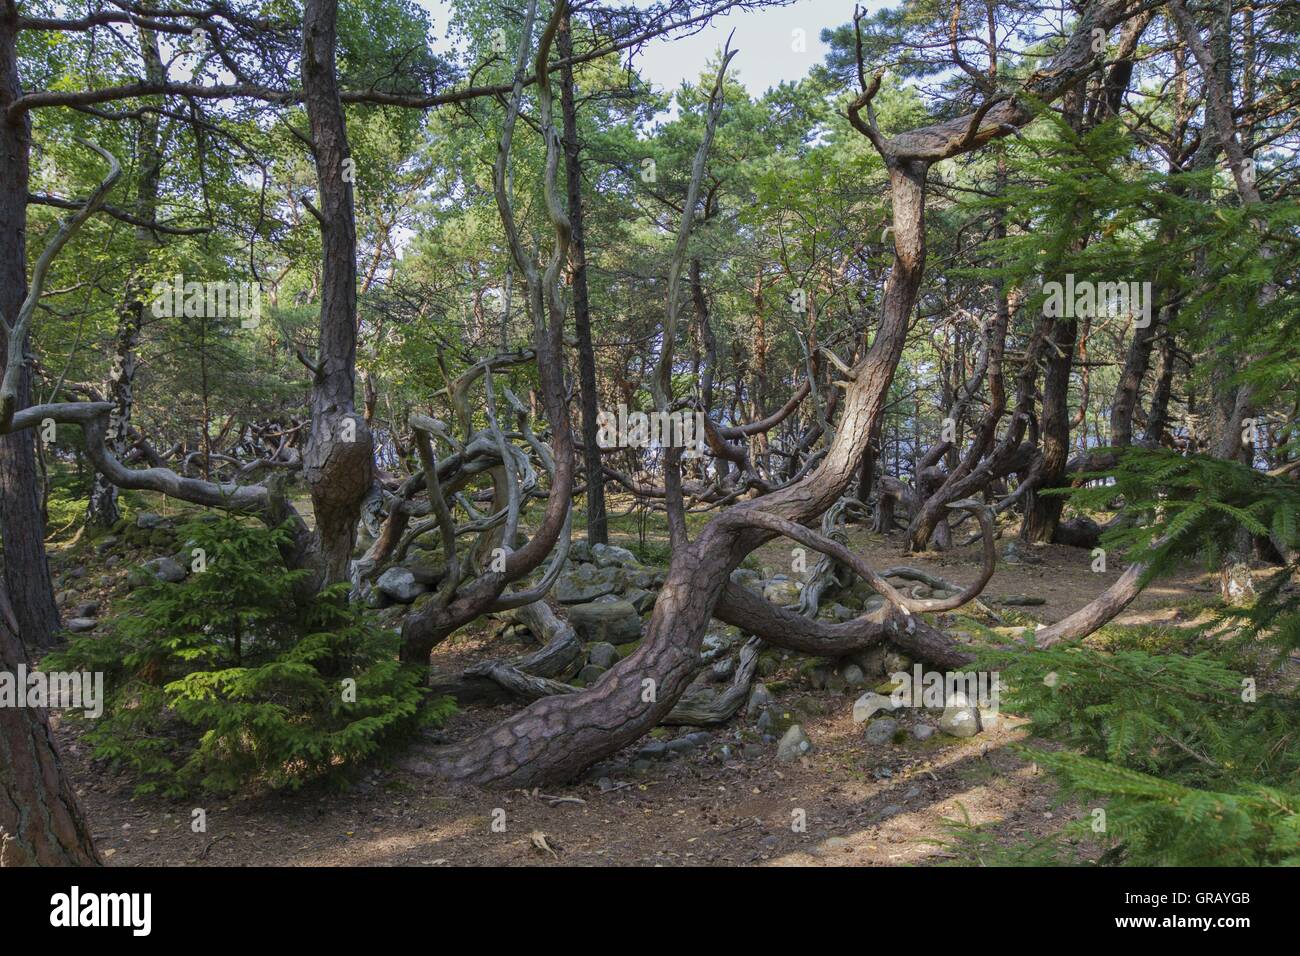 Bizarre Trees In Trollwald The Nature Reserve At Böda On Öland Island, Sweden Stock Photo